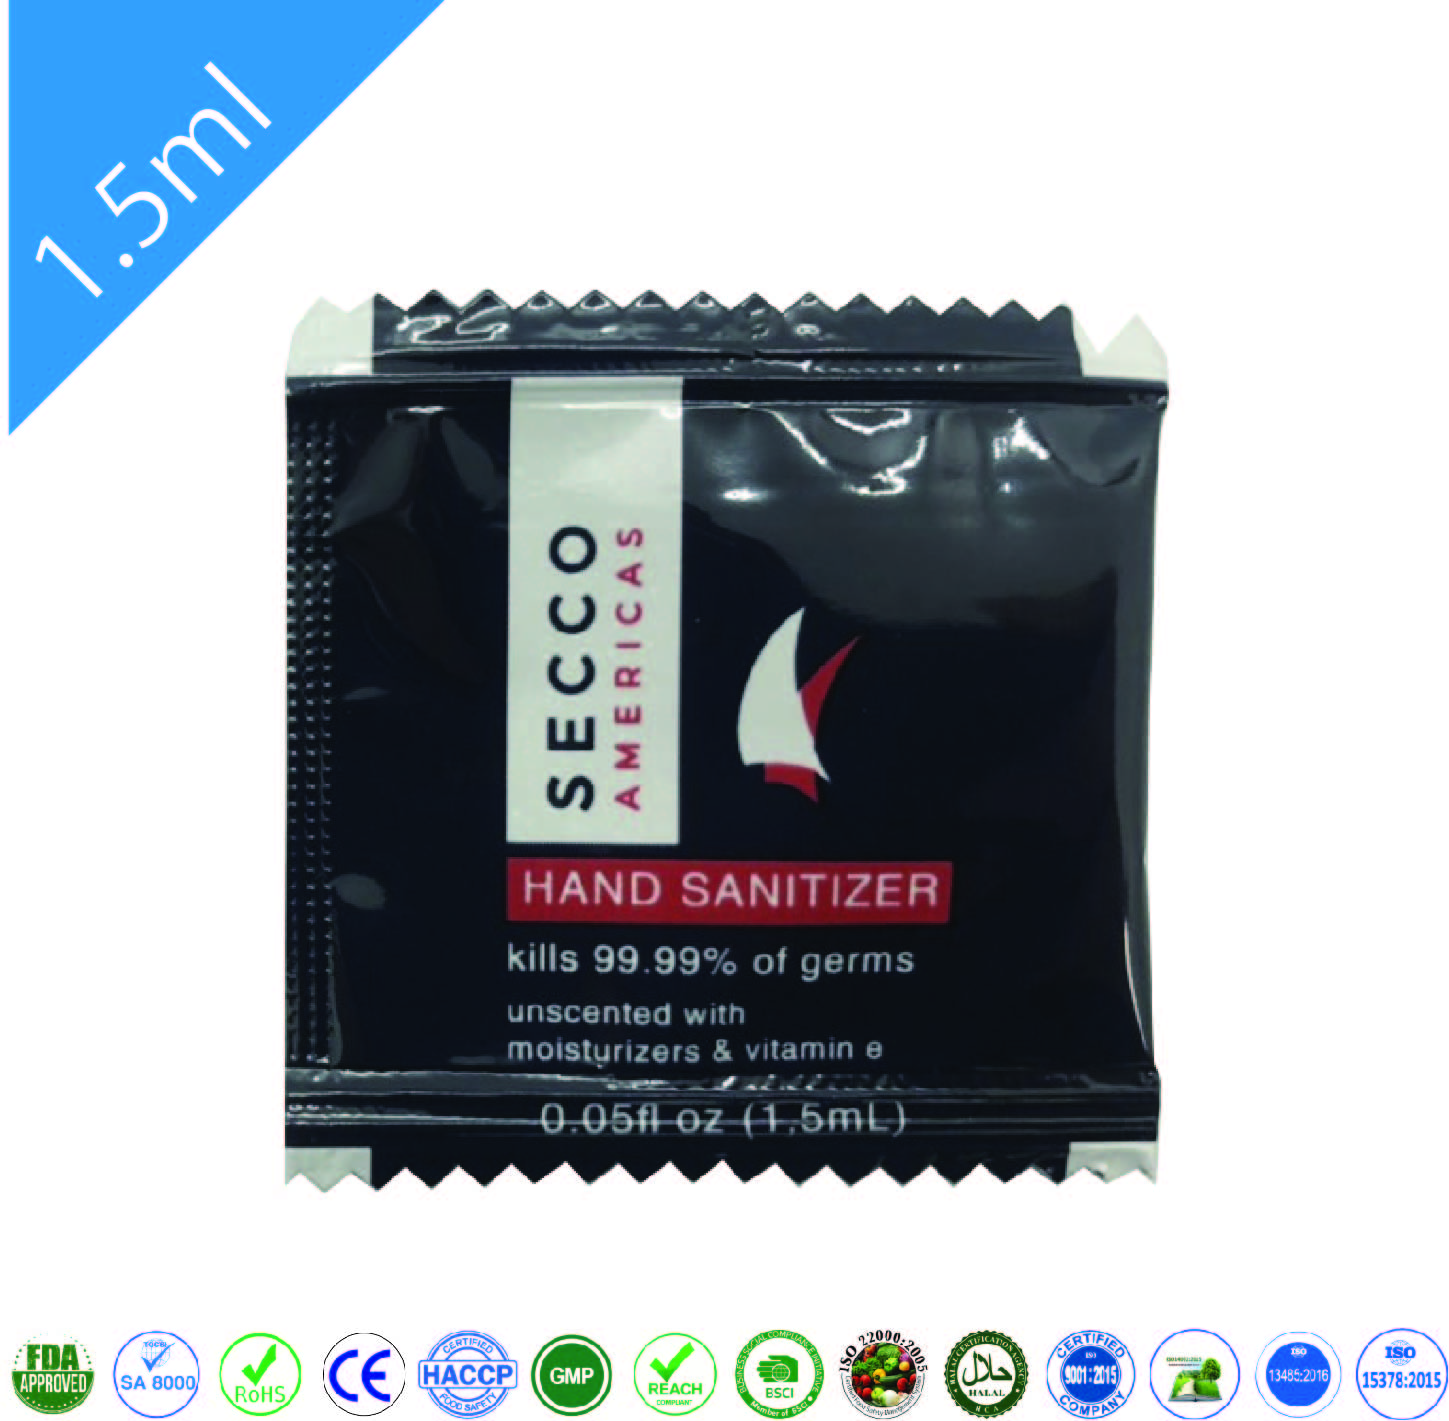 Secco hand sanitizer 1.5ml in sachet